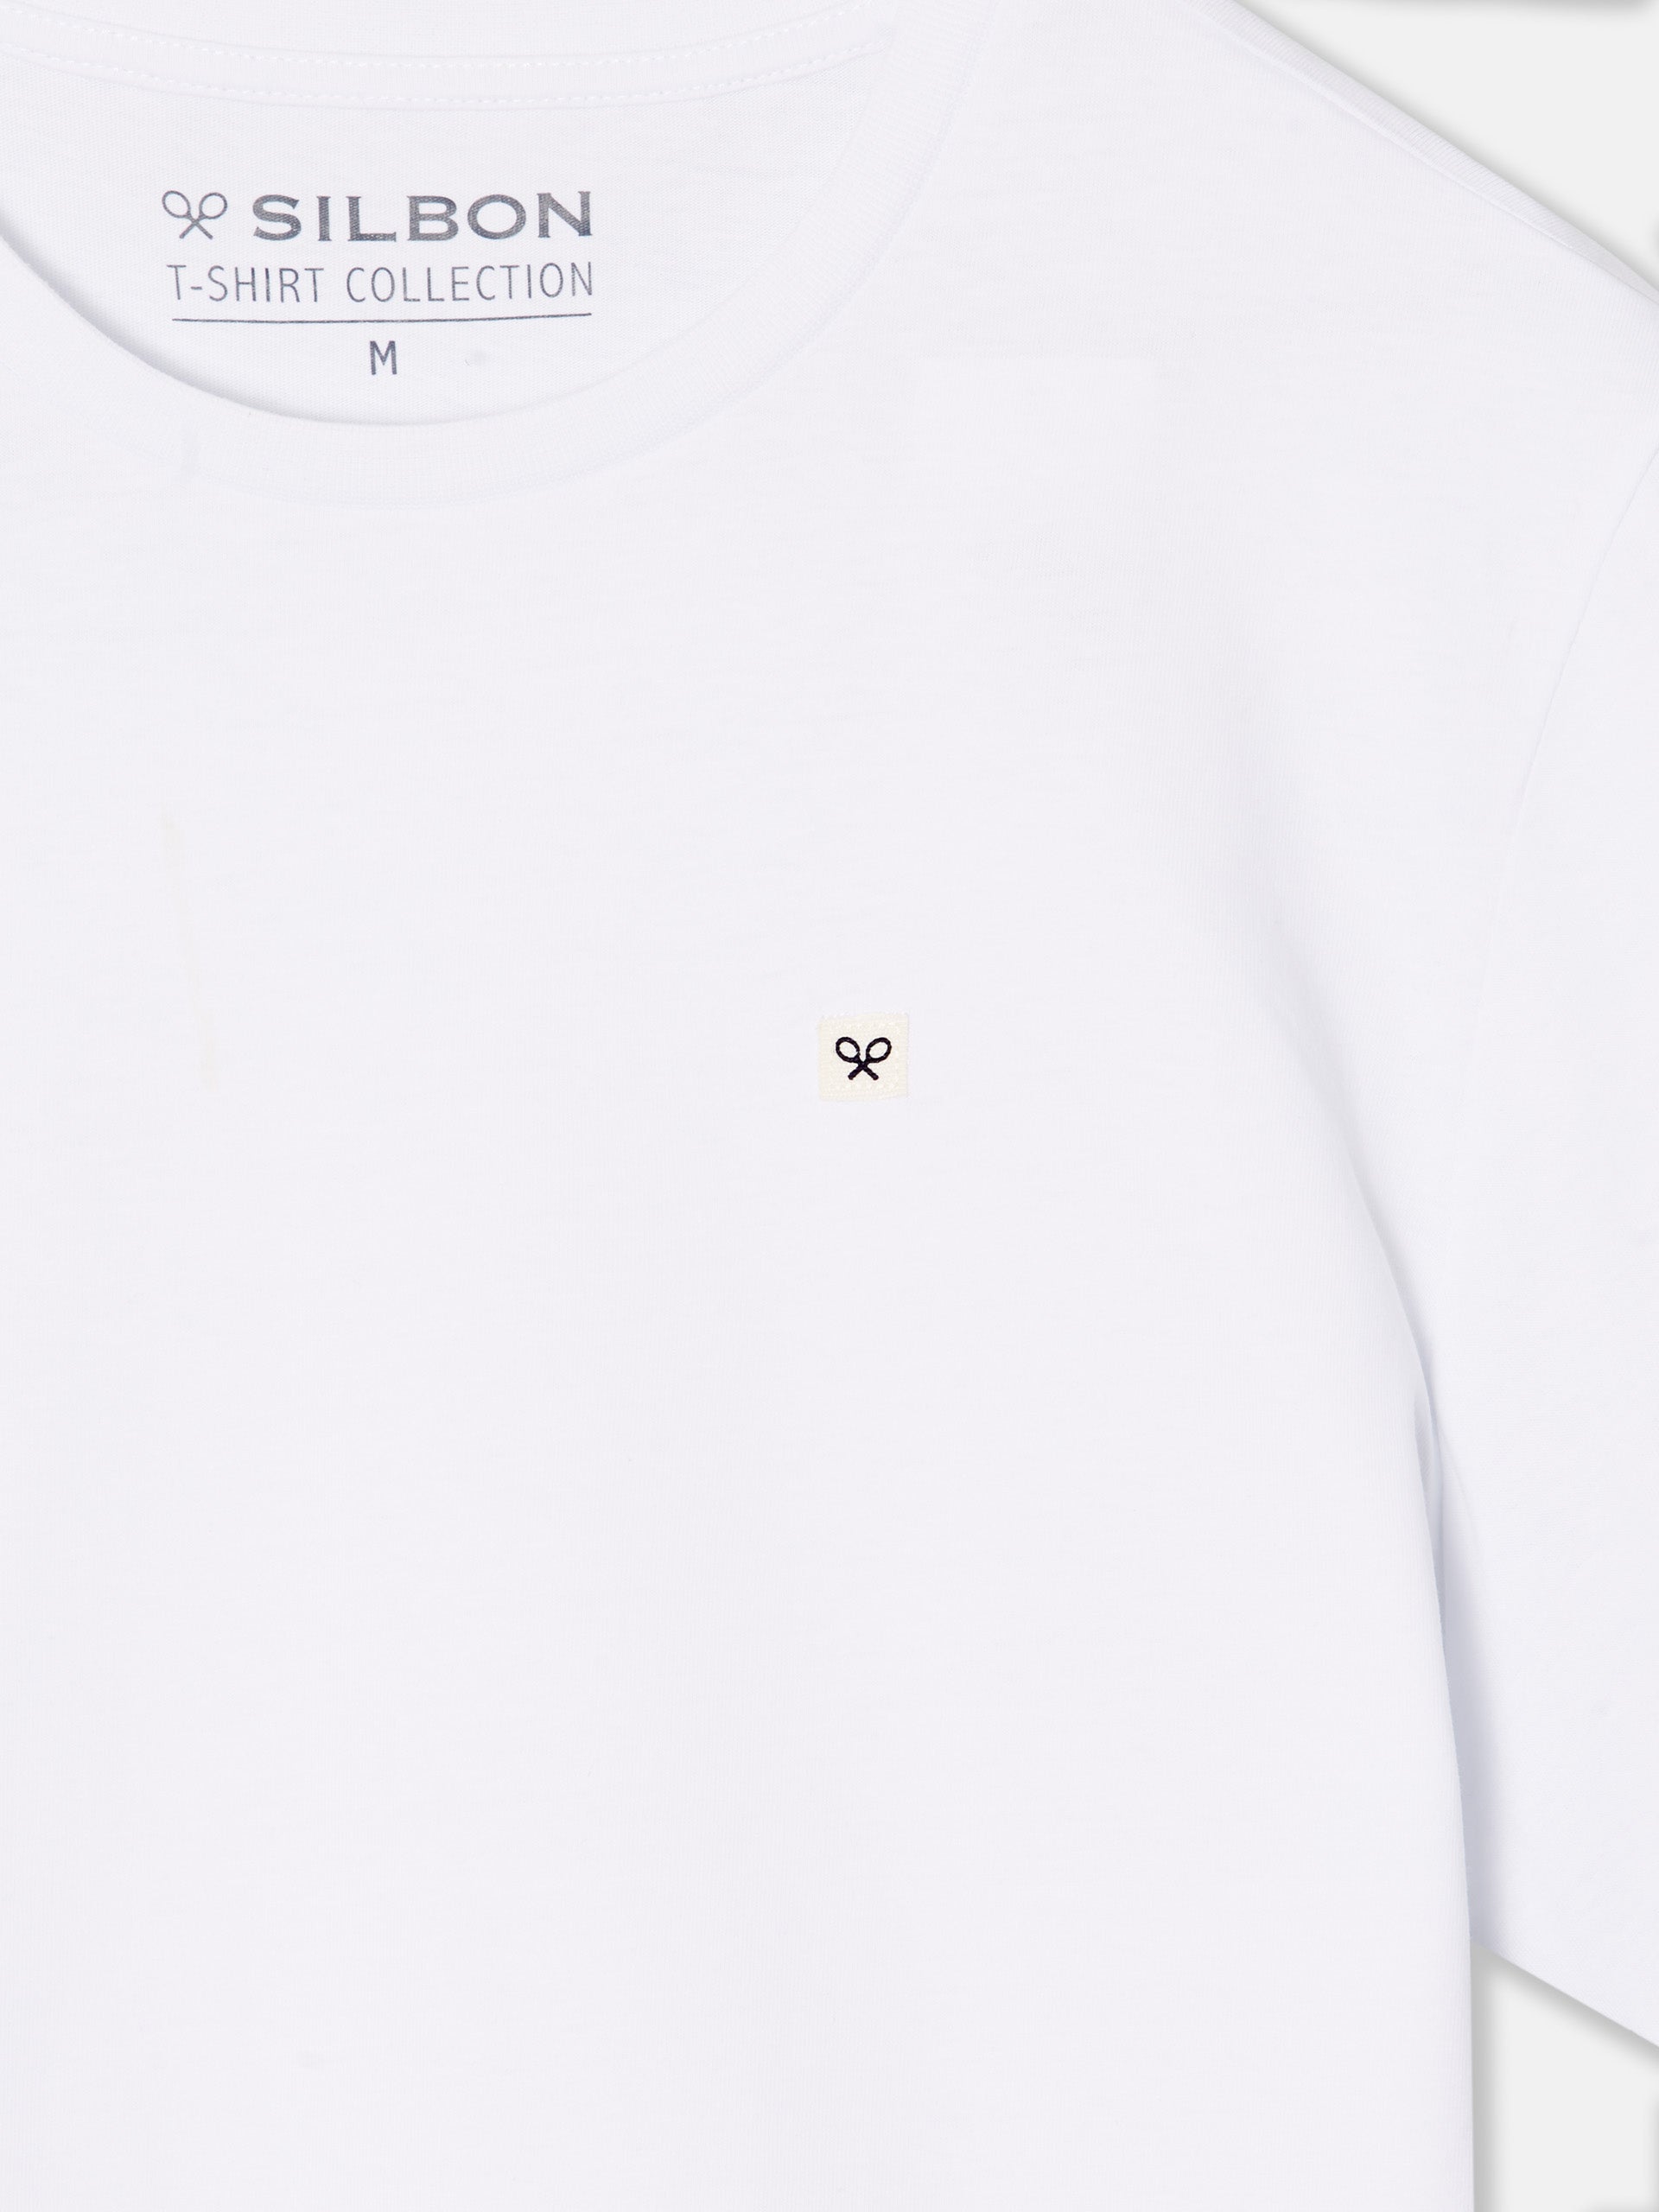 Camiseta silbon miniparche blanca +